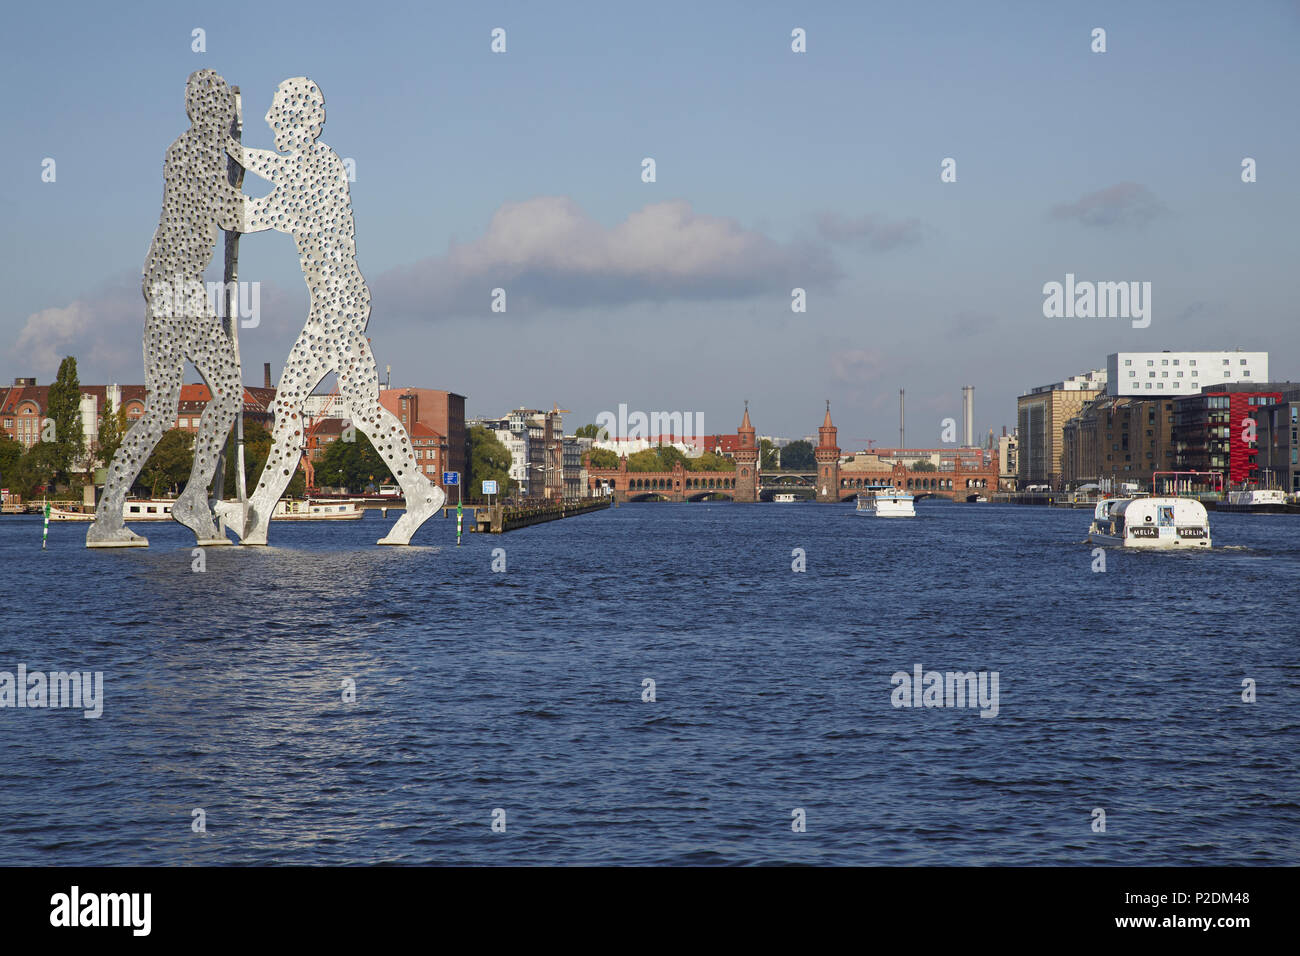 Sculpture de la molécule Man près du pont Oberbaumbruecke, Spree, Berlin, Germany, Europe Banque D'Images